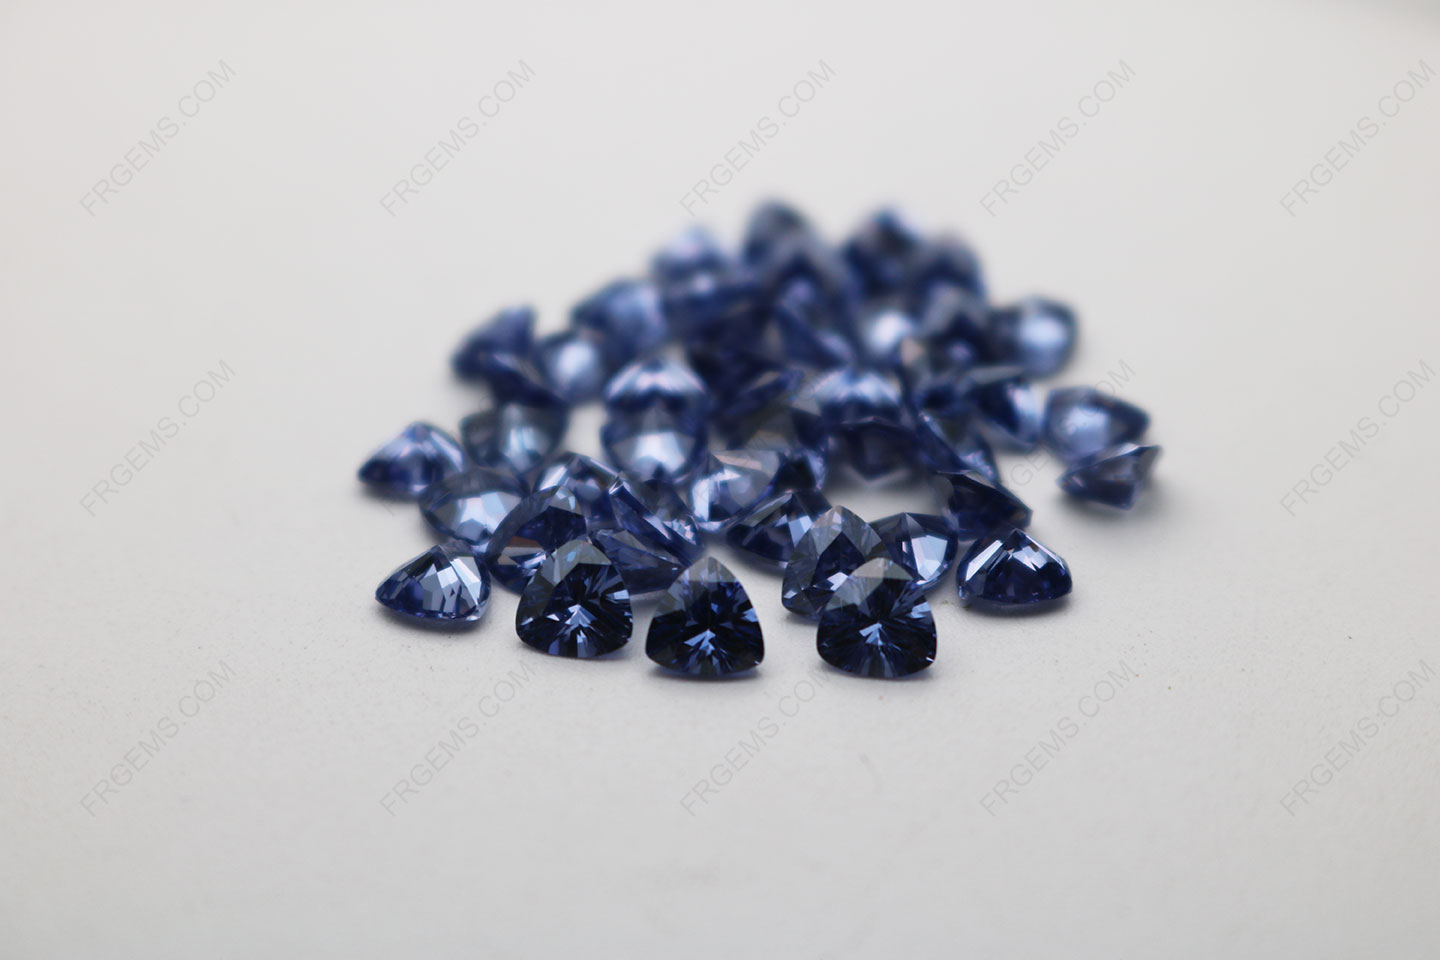 Cubic_Zirconia_Tanzanite_Trillion_Shape_Diamond_faceted_cut_5x5mm_stones_IMG_4902